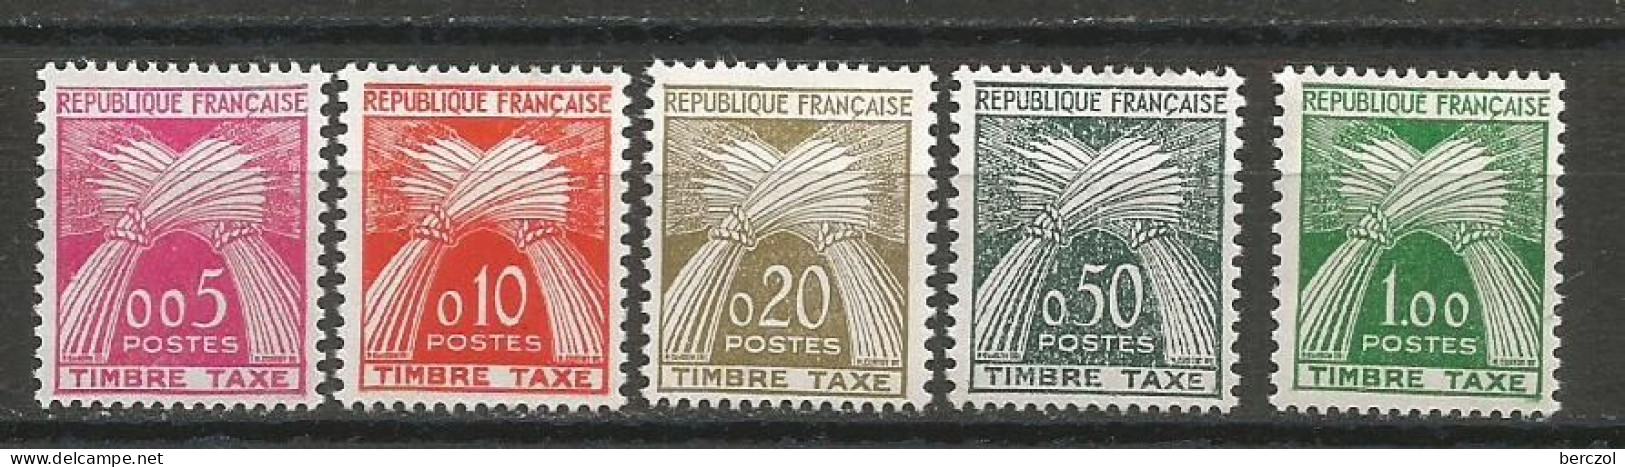 FRANCE ANNEE 1960 TAXE LOT DE 5 TP N°90 à 94 NEUFS ** MNH TB COTE 70,00 €  - 1960-.... Neufs